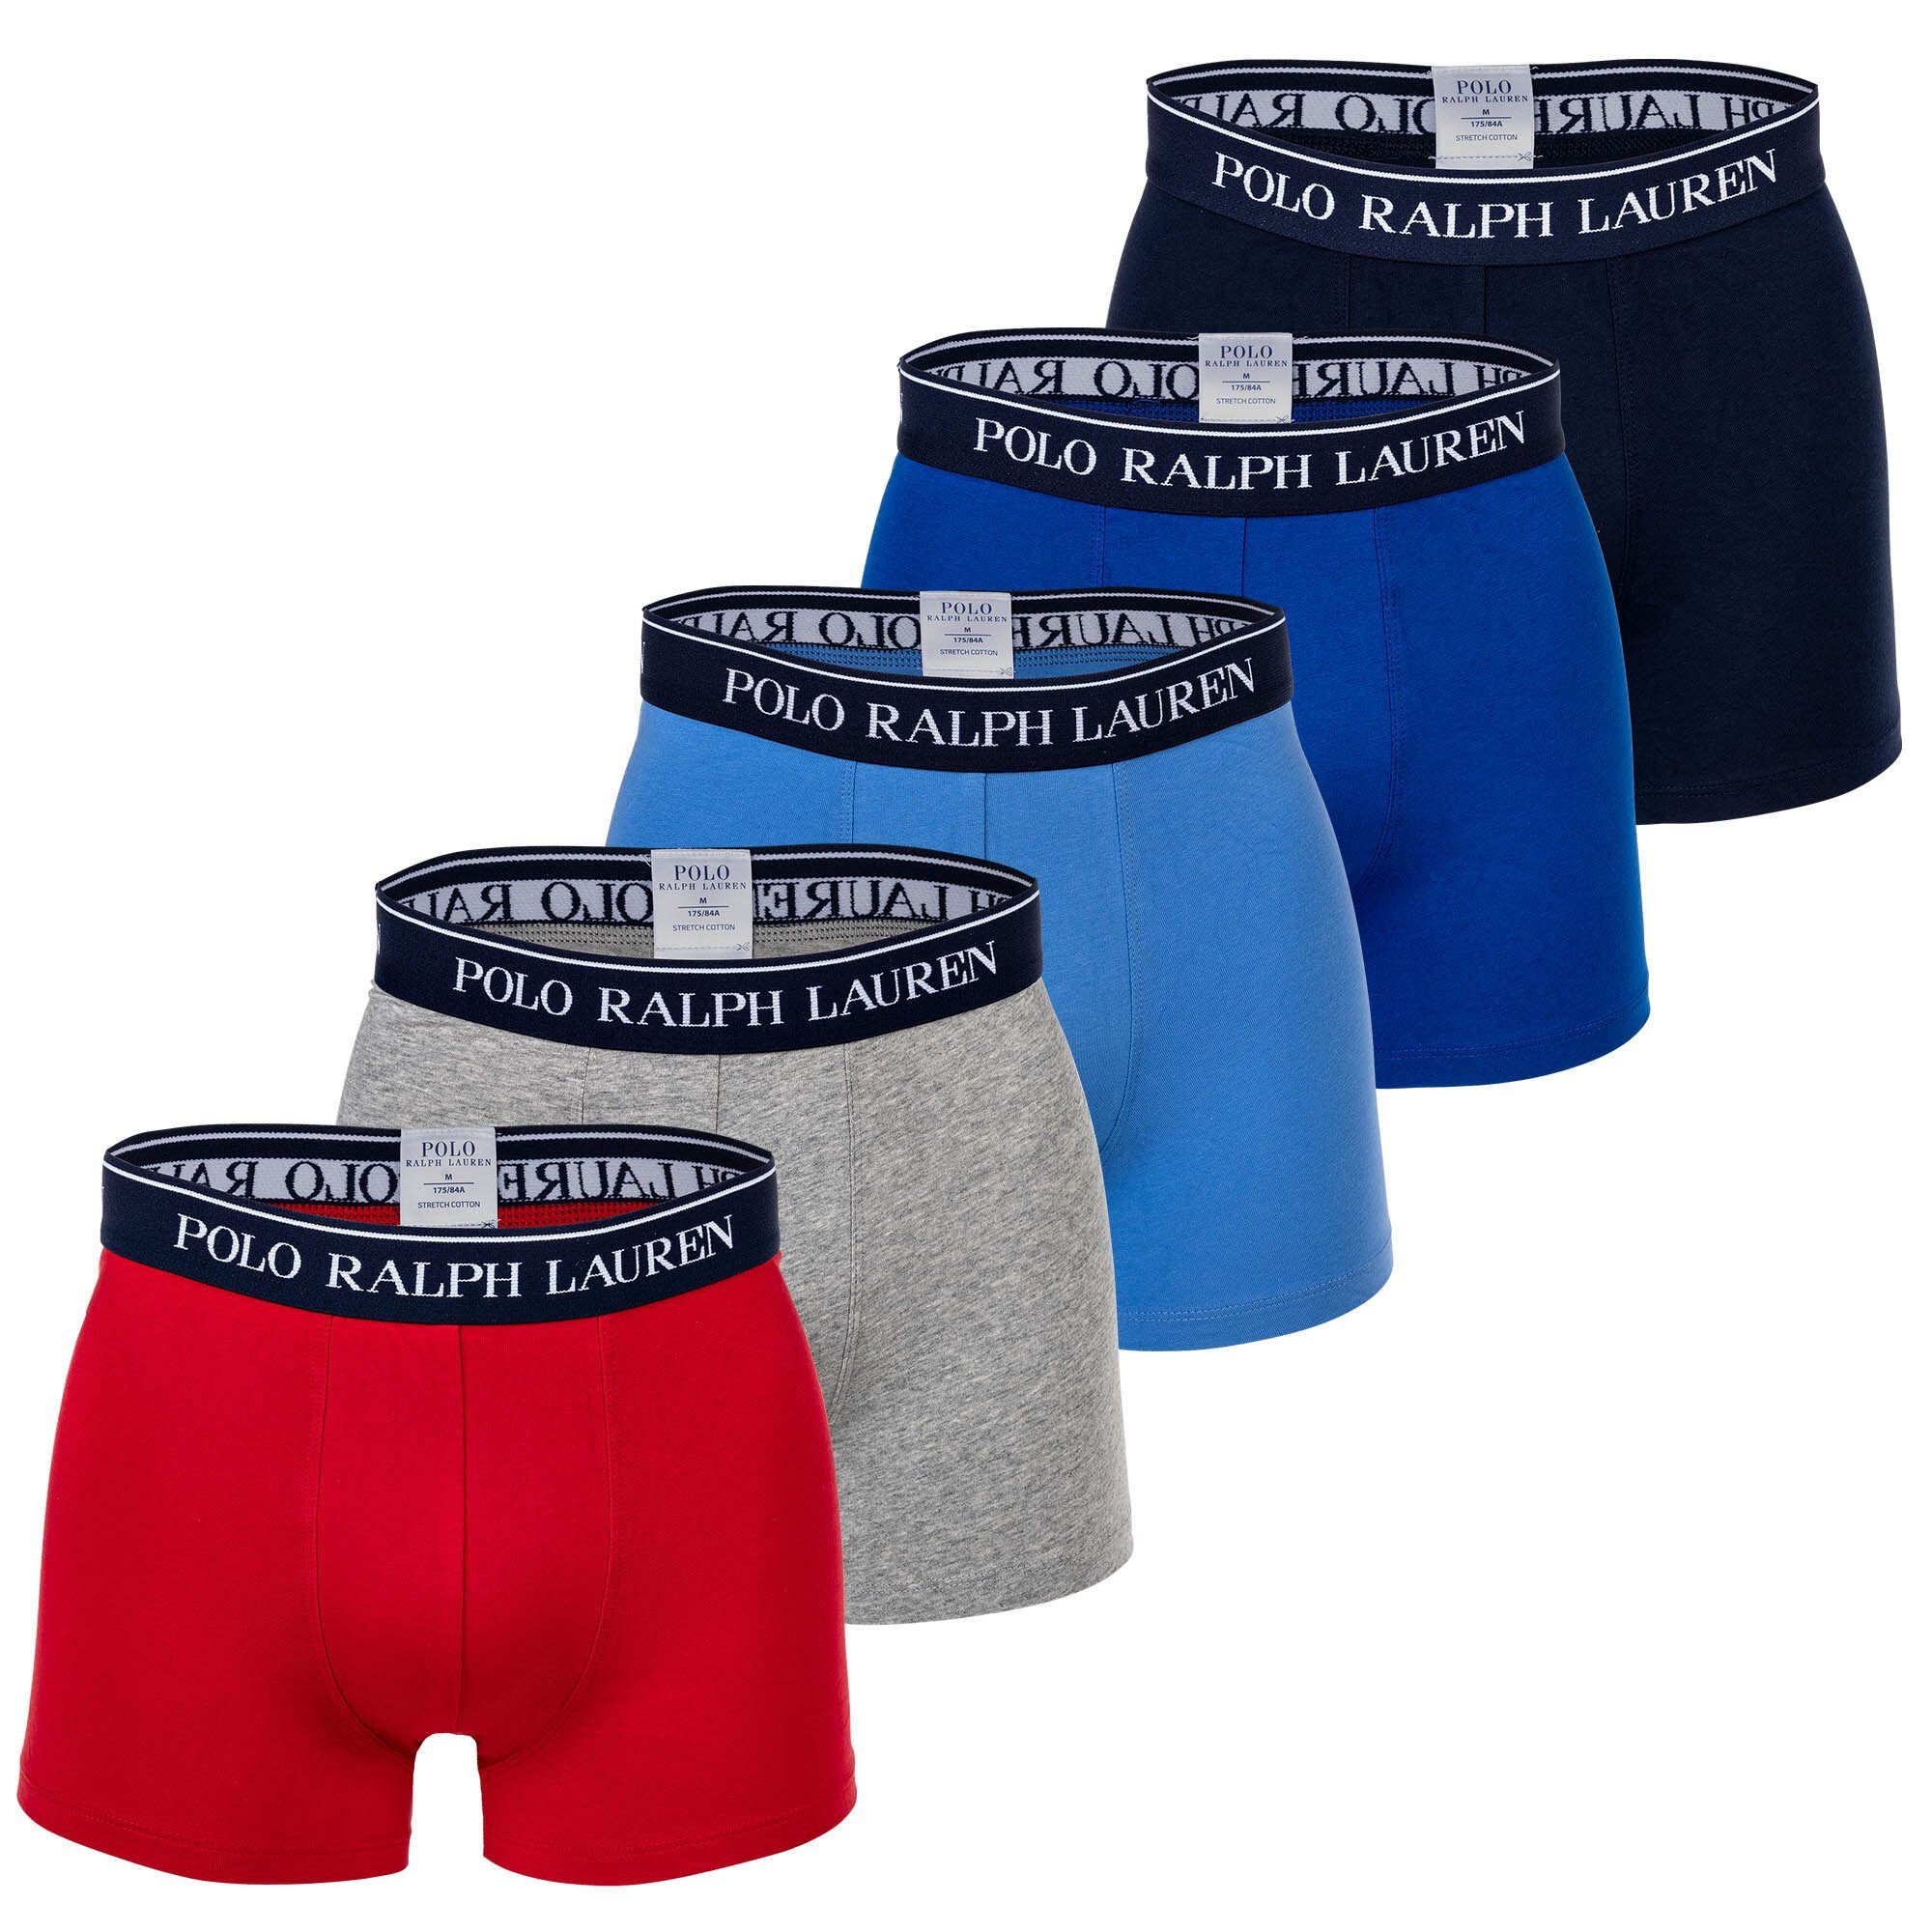 Polo Ralph Lauren Boxer Herren Boxer Shorts, 5er Pack - CLSSIC TRUNK-5 Blau/Rot/Grau